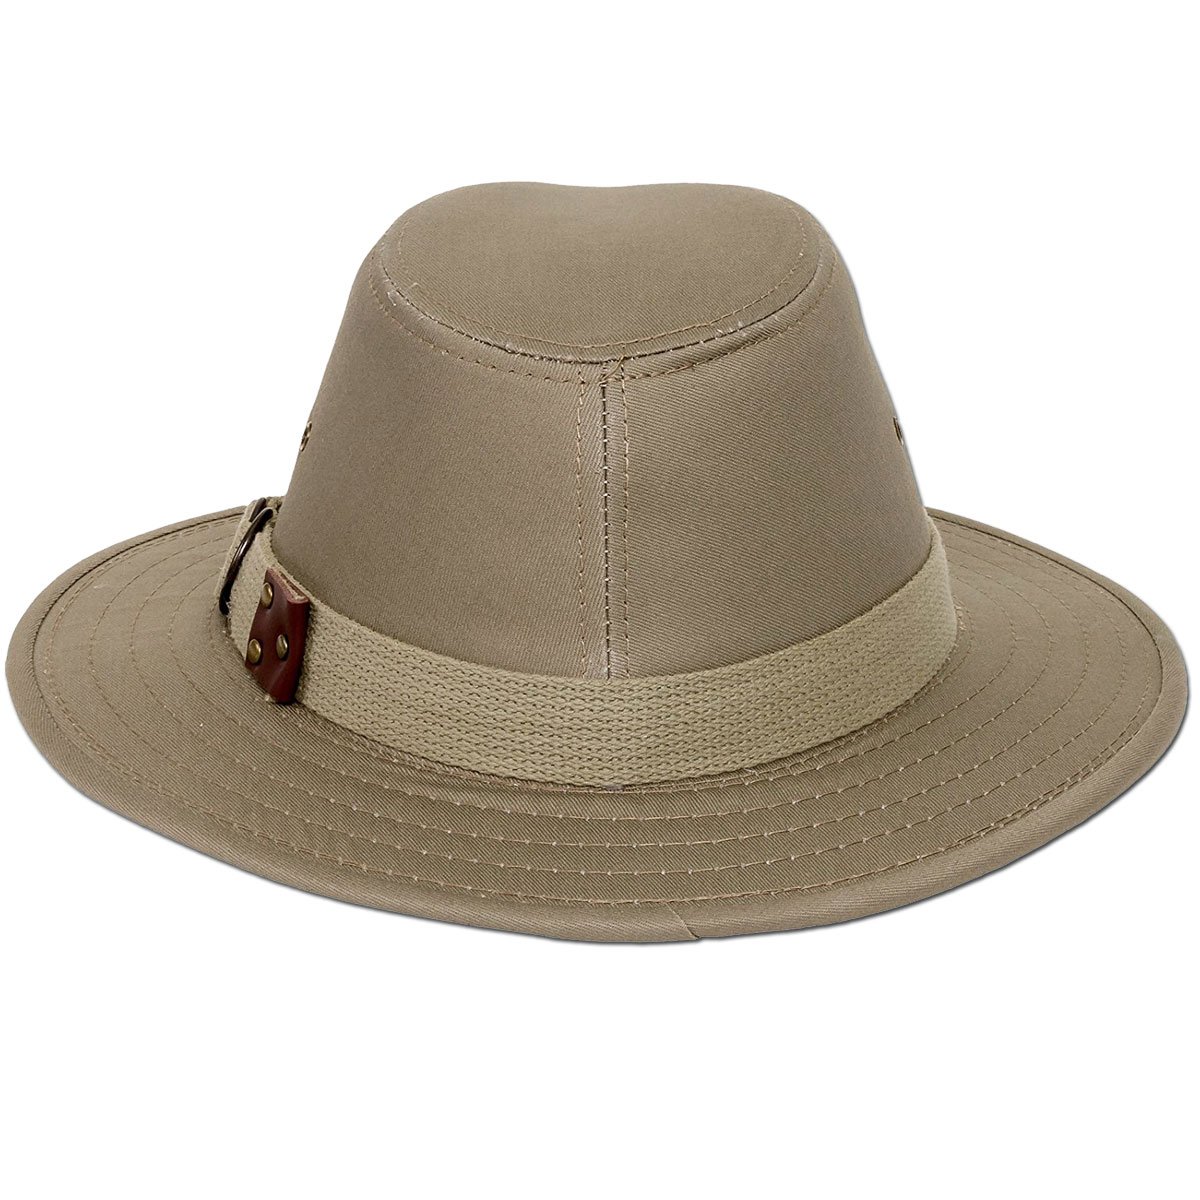 Panama Jack Boonie/Bush Hats for Men